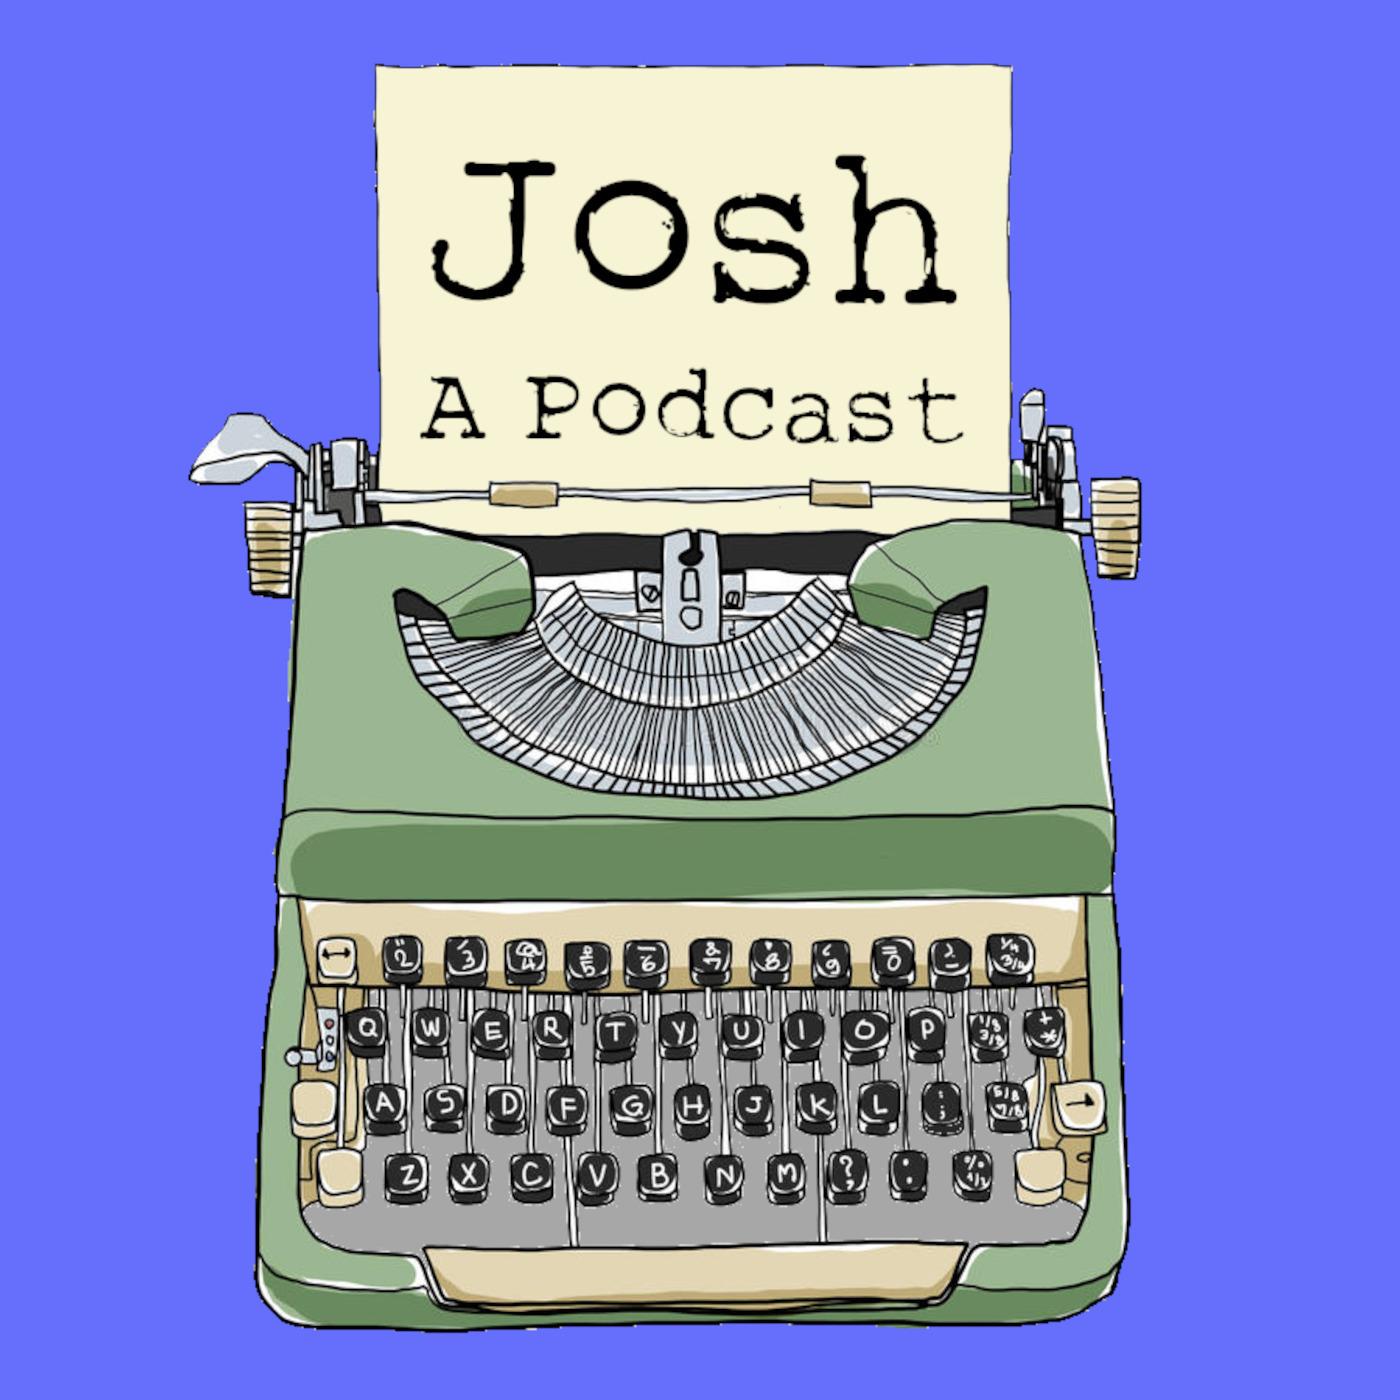 Josh: A Podcast